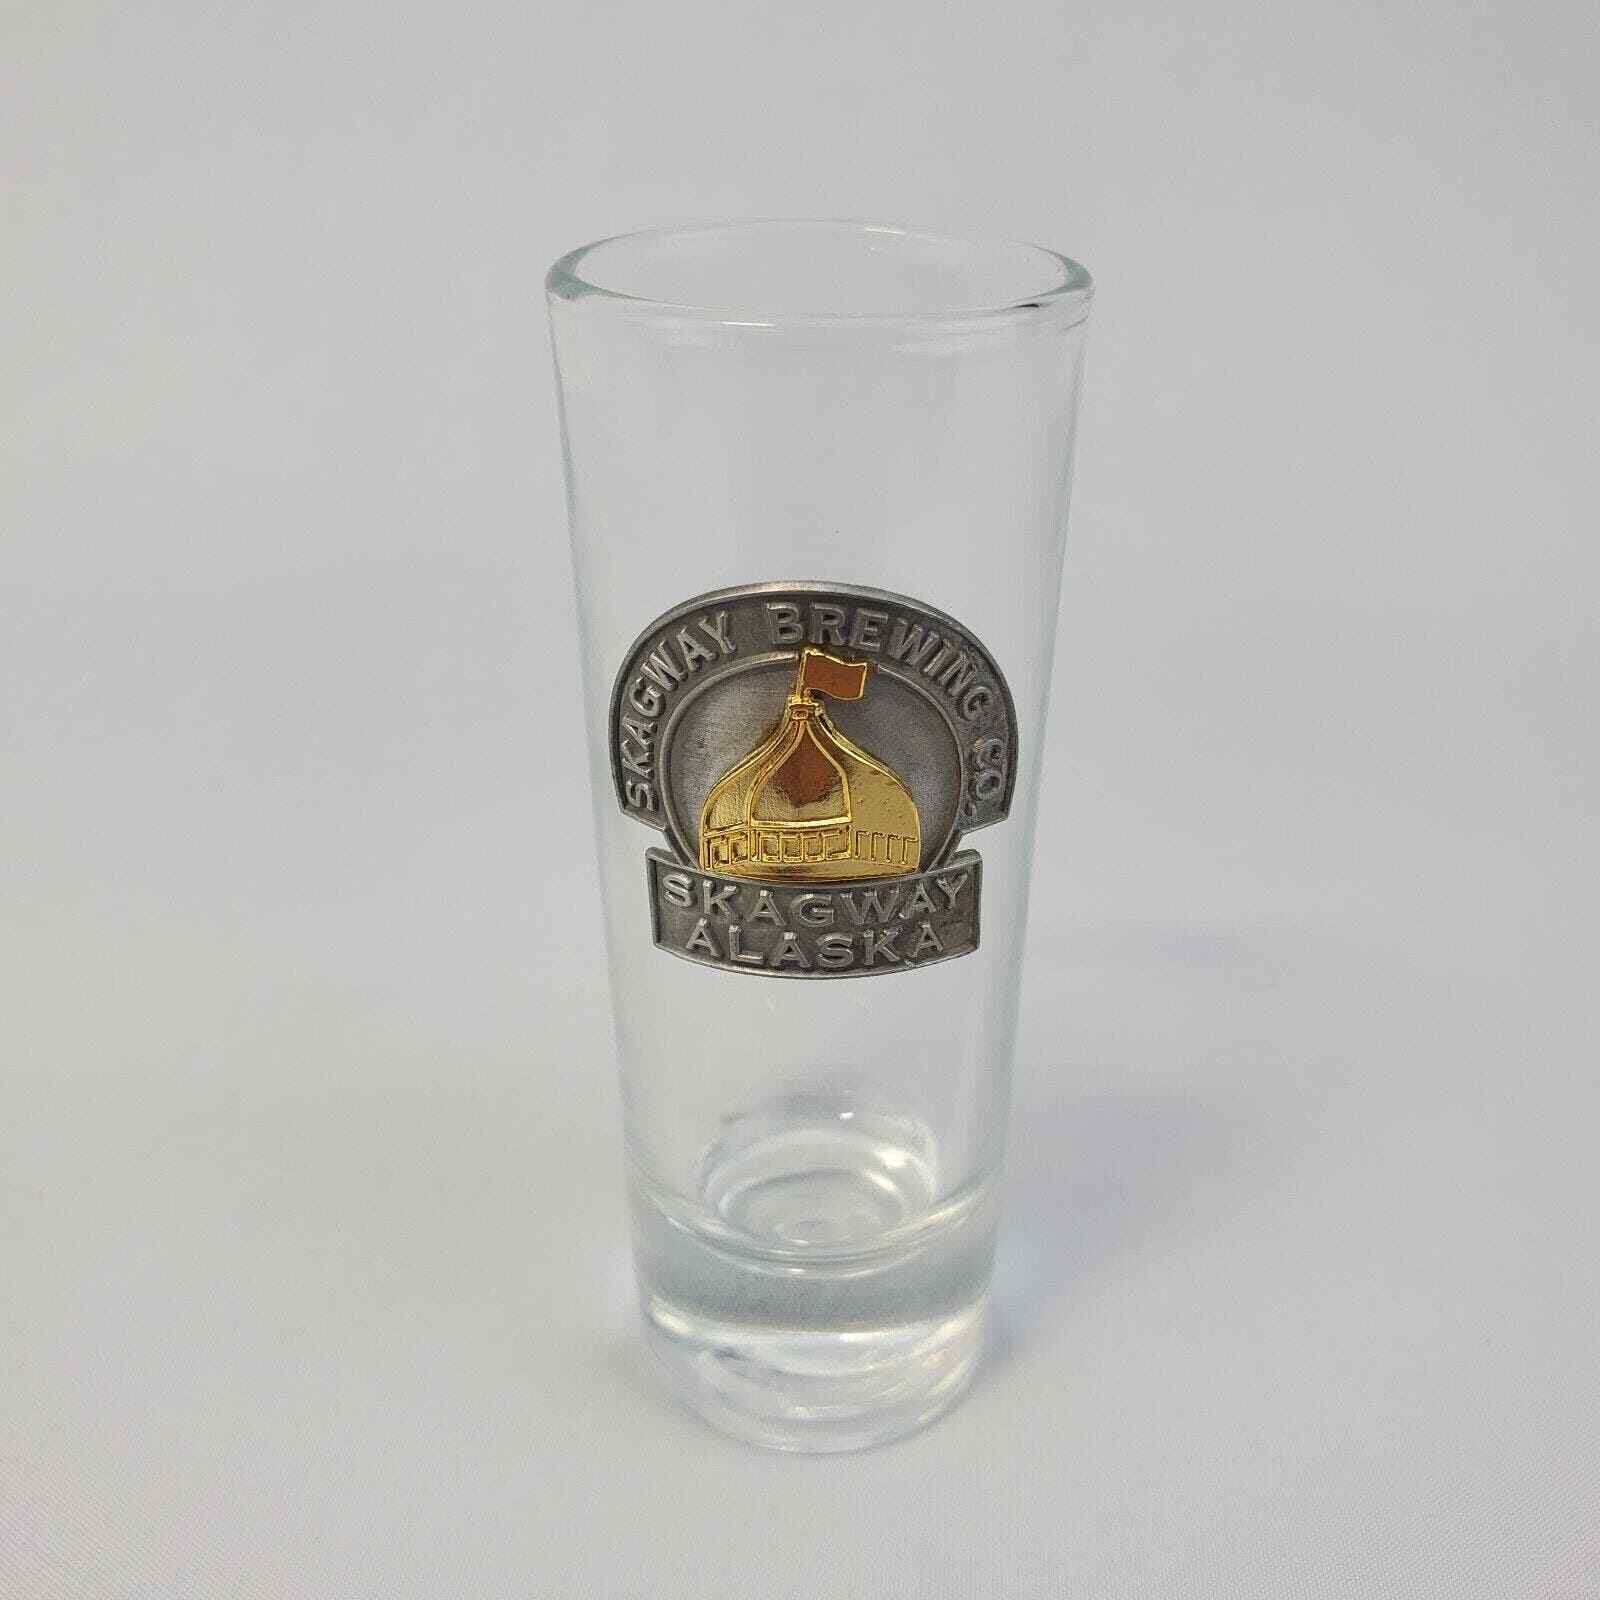 Skagway Brewing Co. Skagway, Alaska Since 1897 Shotglass - Collectible Brewery